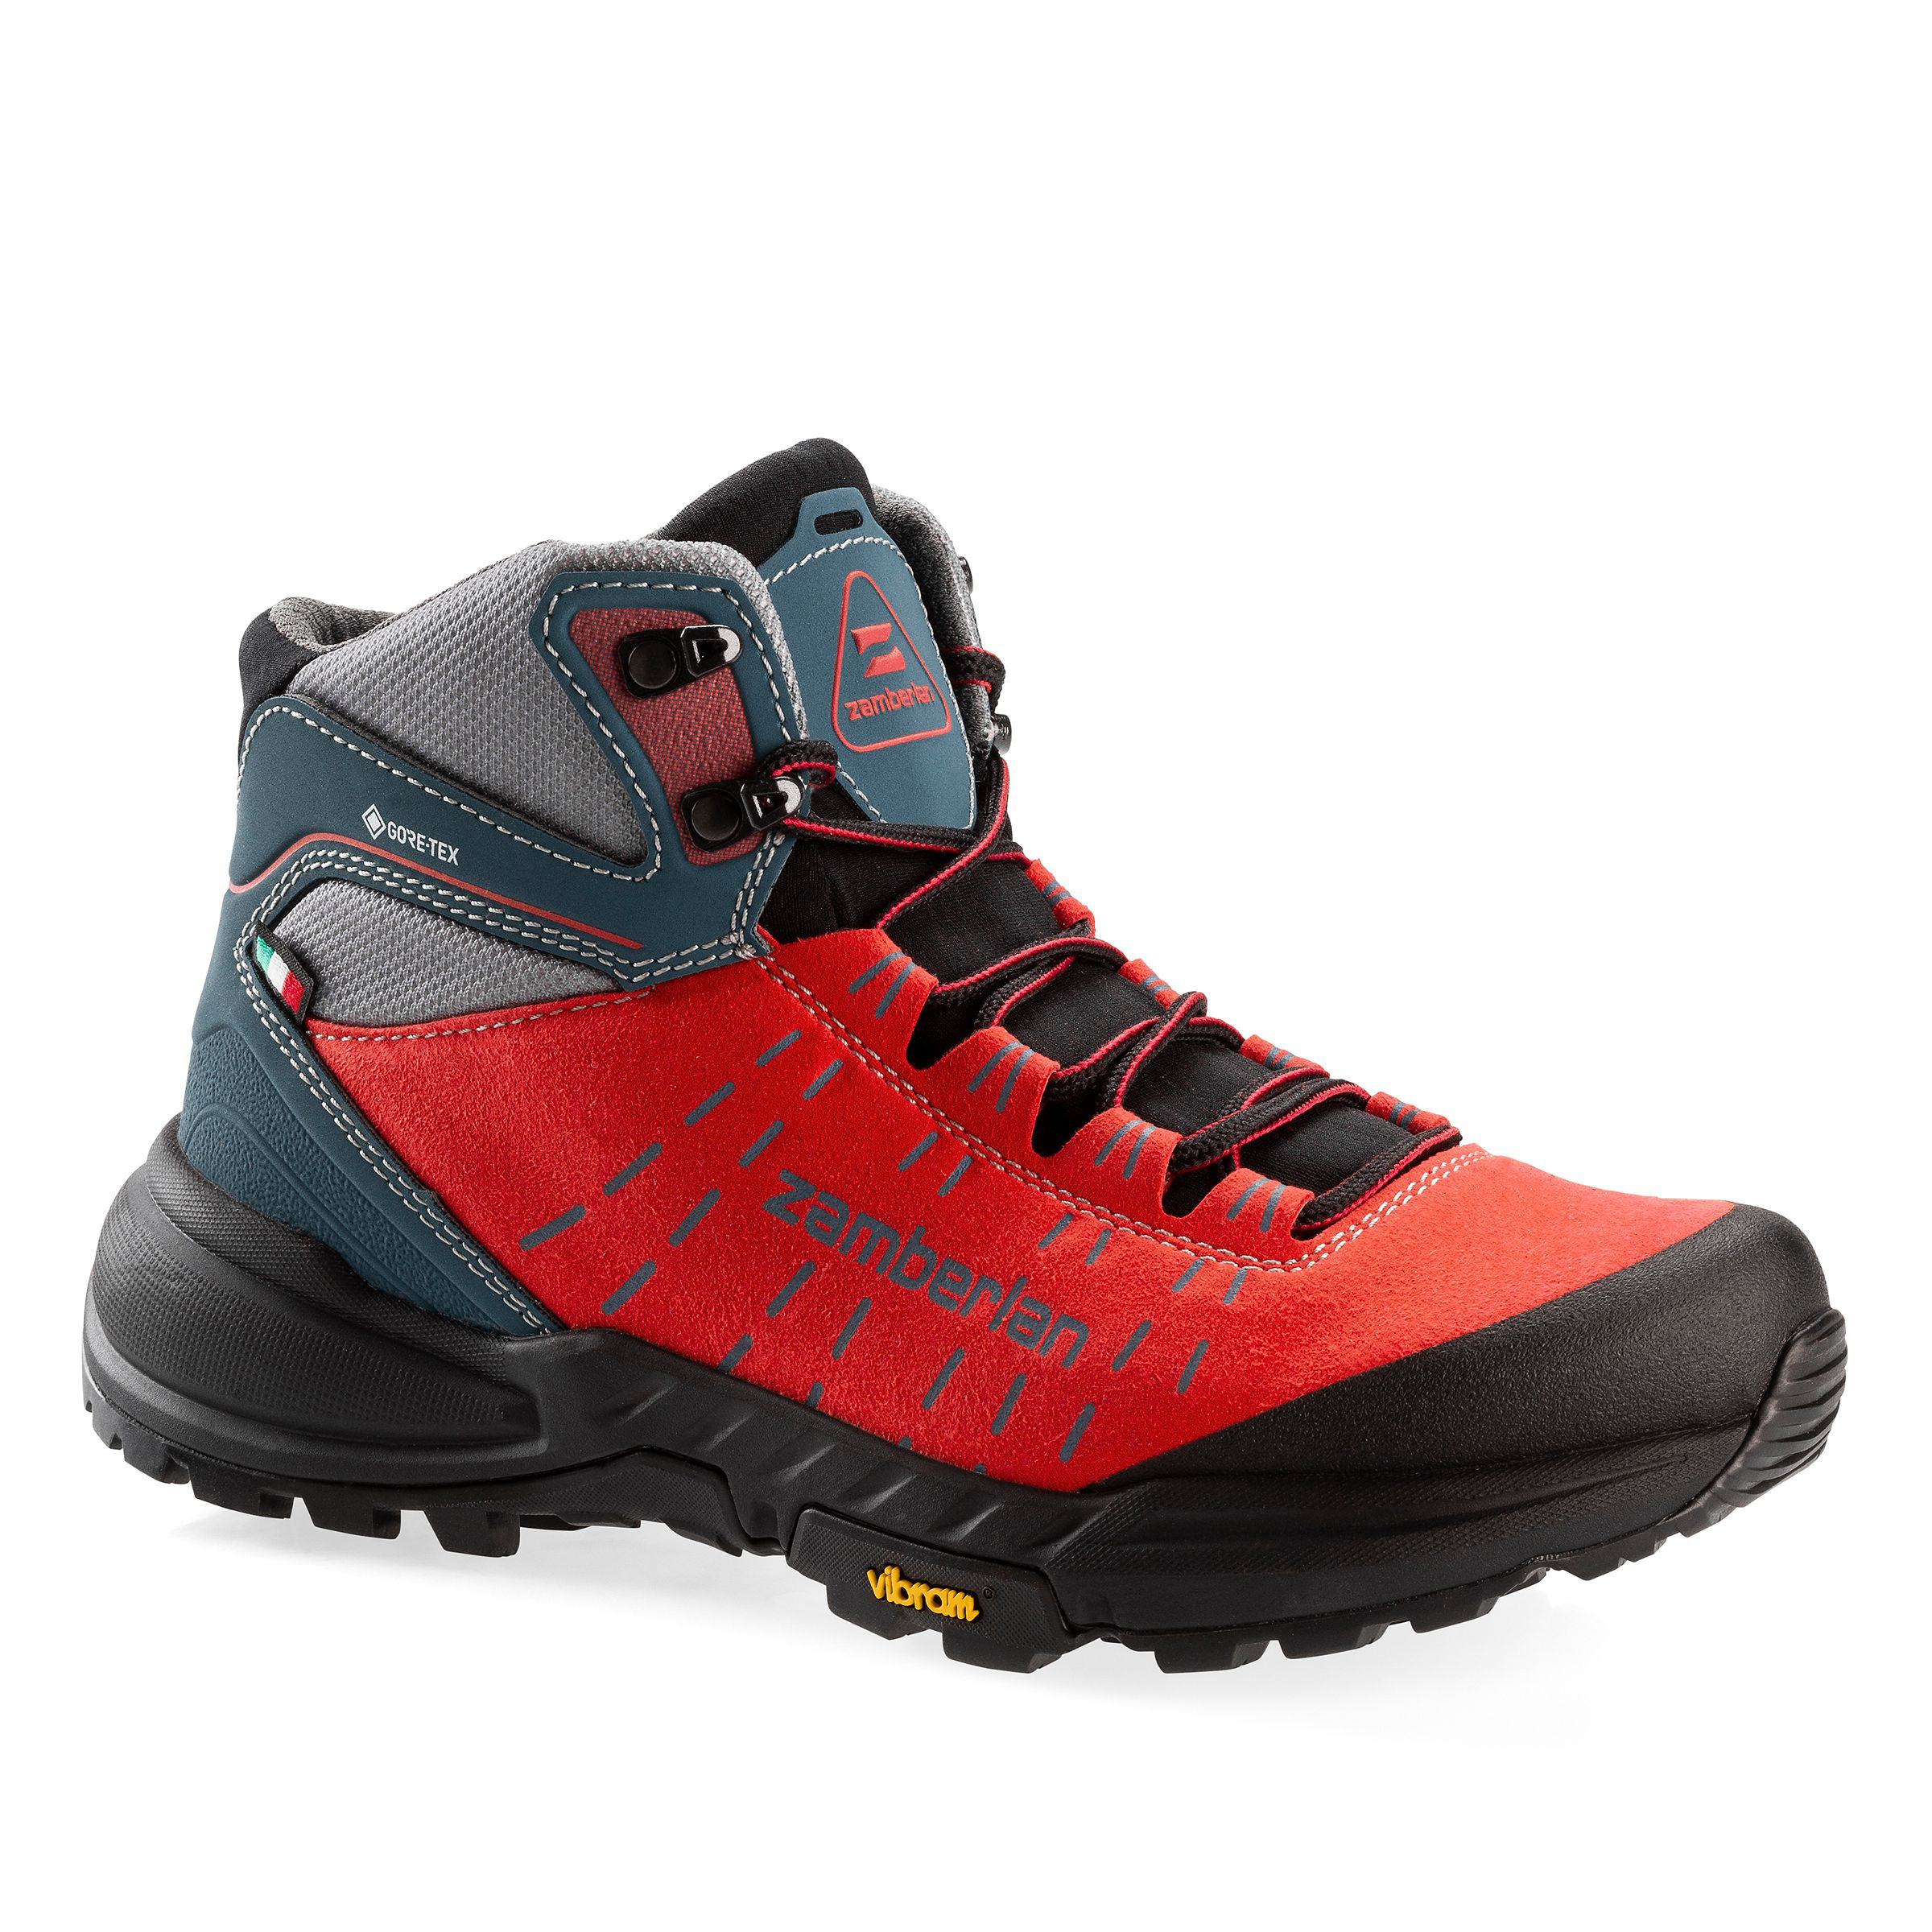 Zamberlan 334 Circe GTX Waterproof Hiking Boots for Ladies - Red - 7M